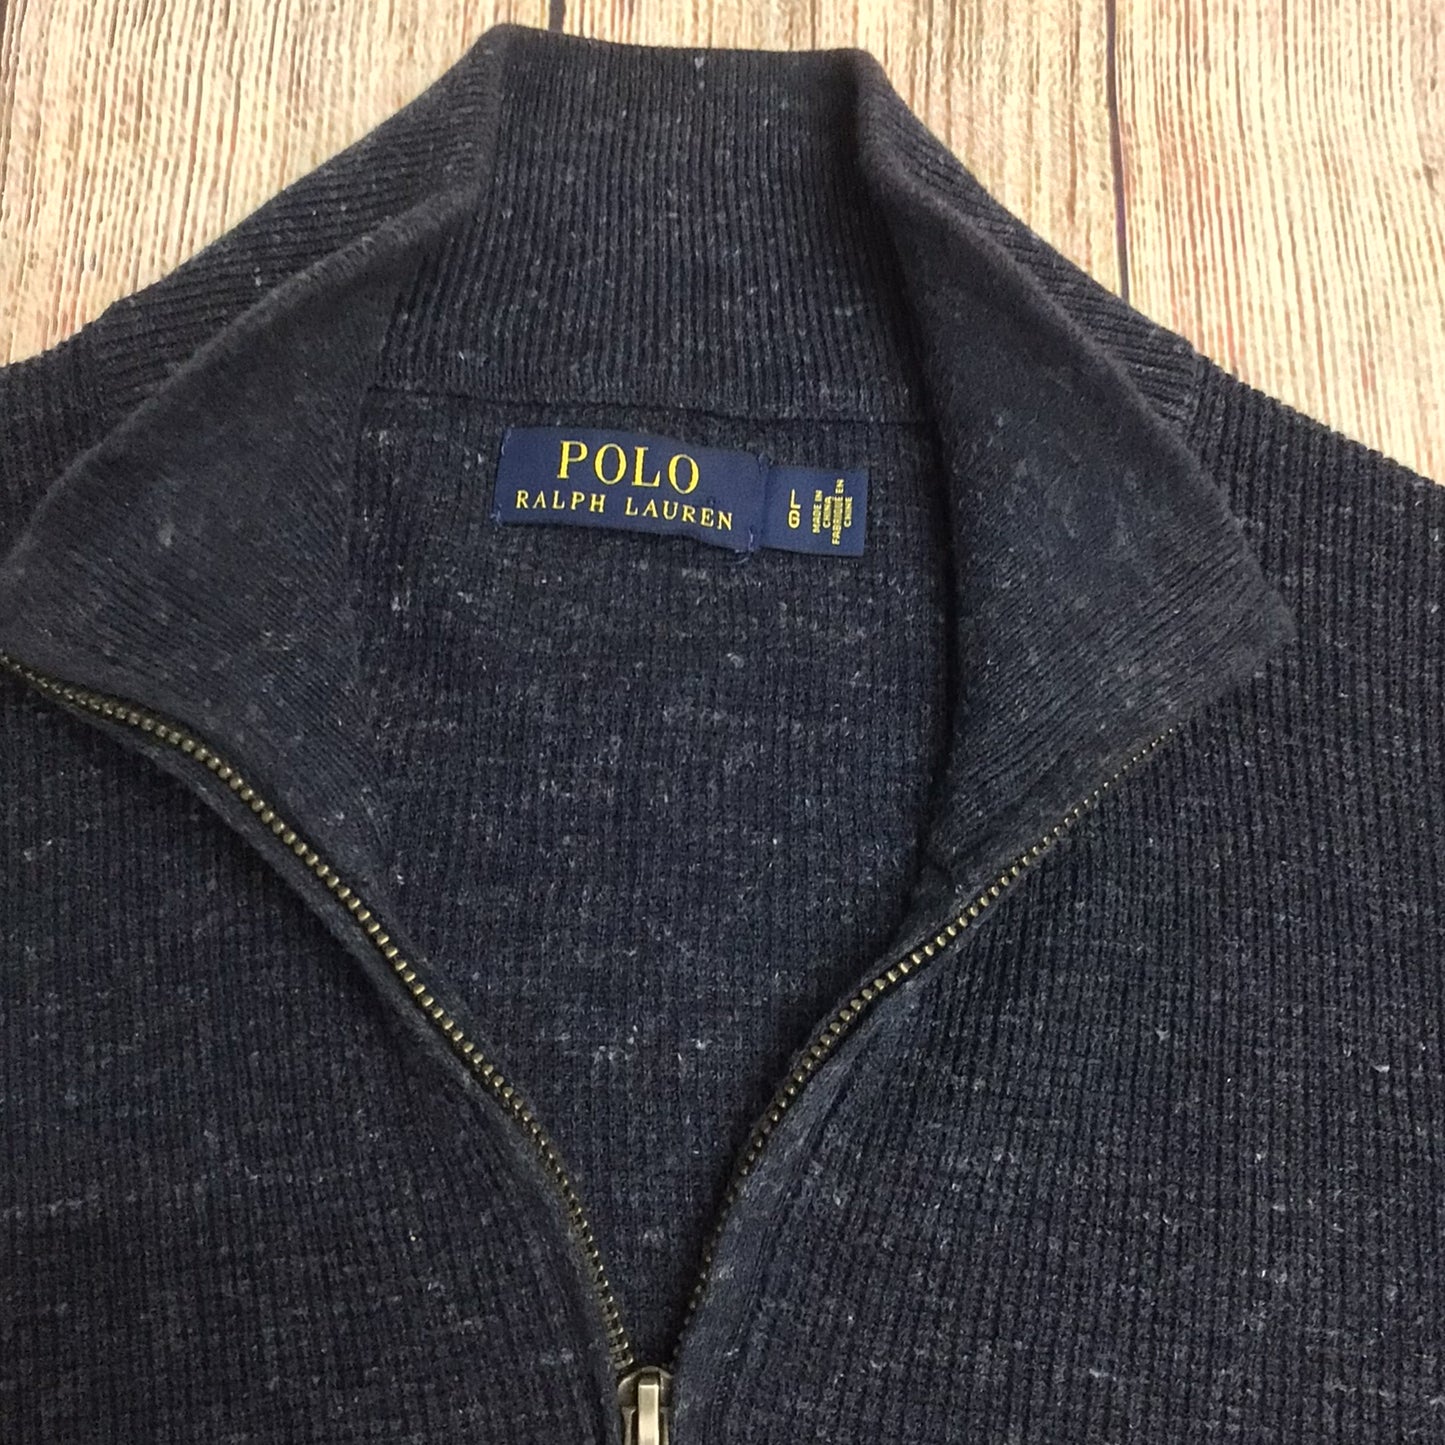 Polo Ralph Lauren Navy Blue Speckled Zip Neck Jumper 100% Cotton Size L